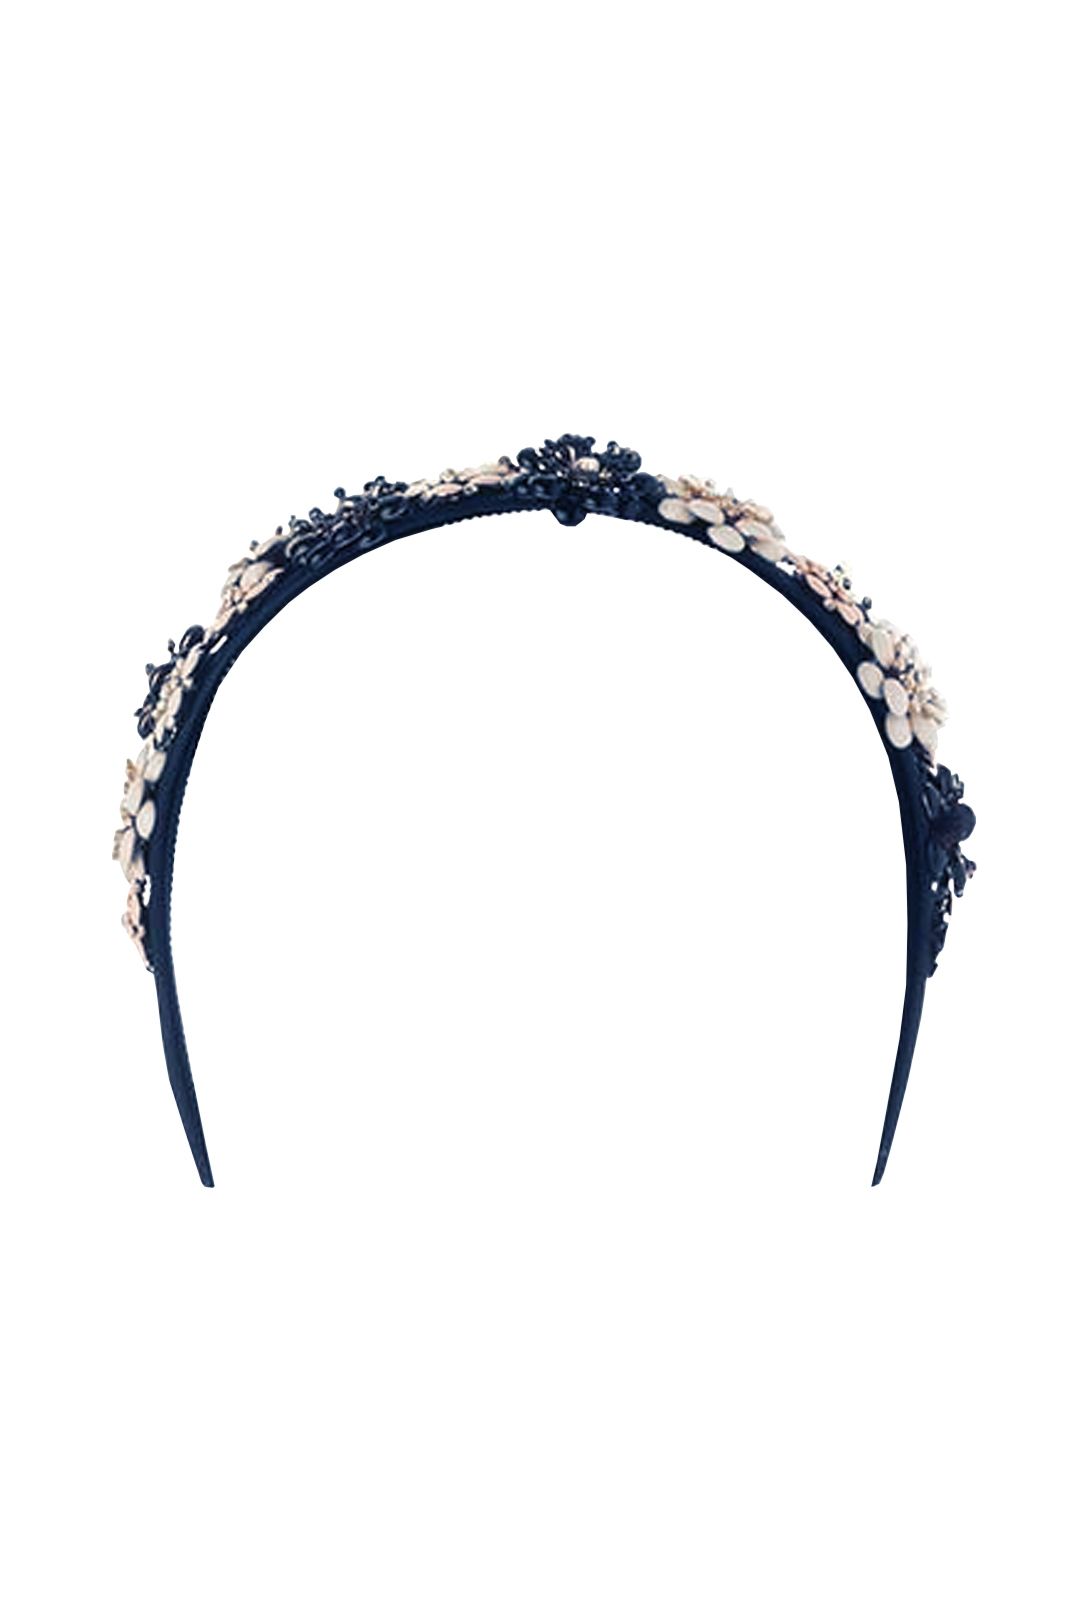 Olga Berg - Victoria Floral Headband - Navy - Front